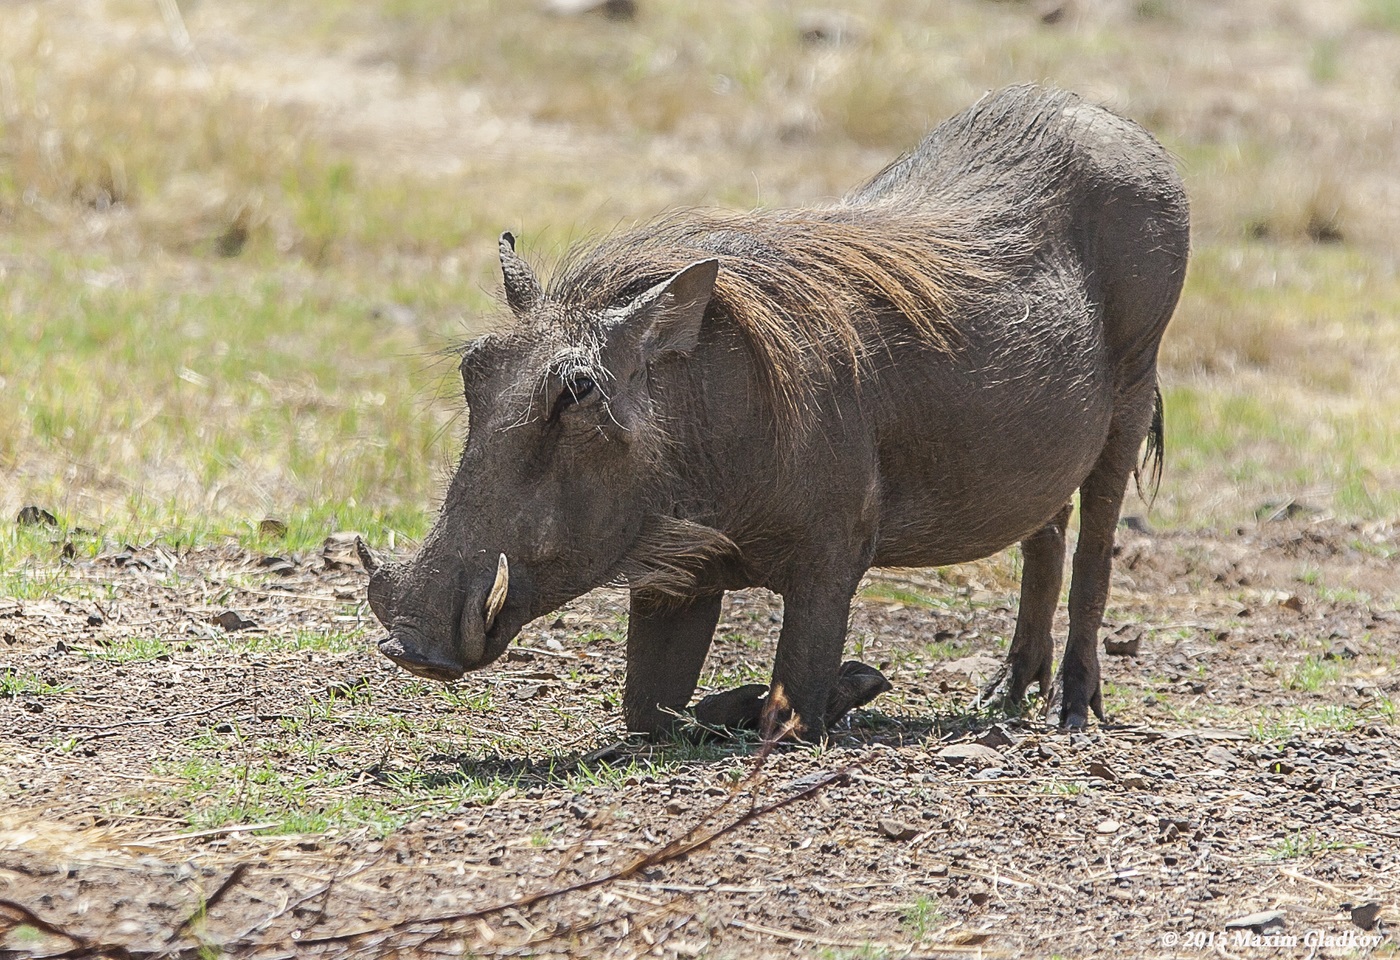 Warthog grazing kneeling, South Africa, October 2015